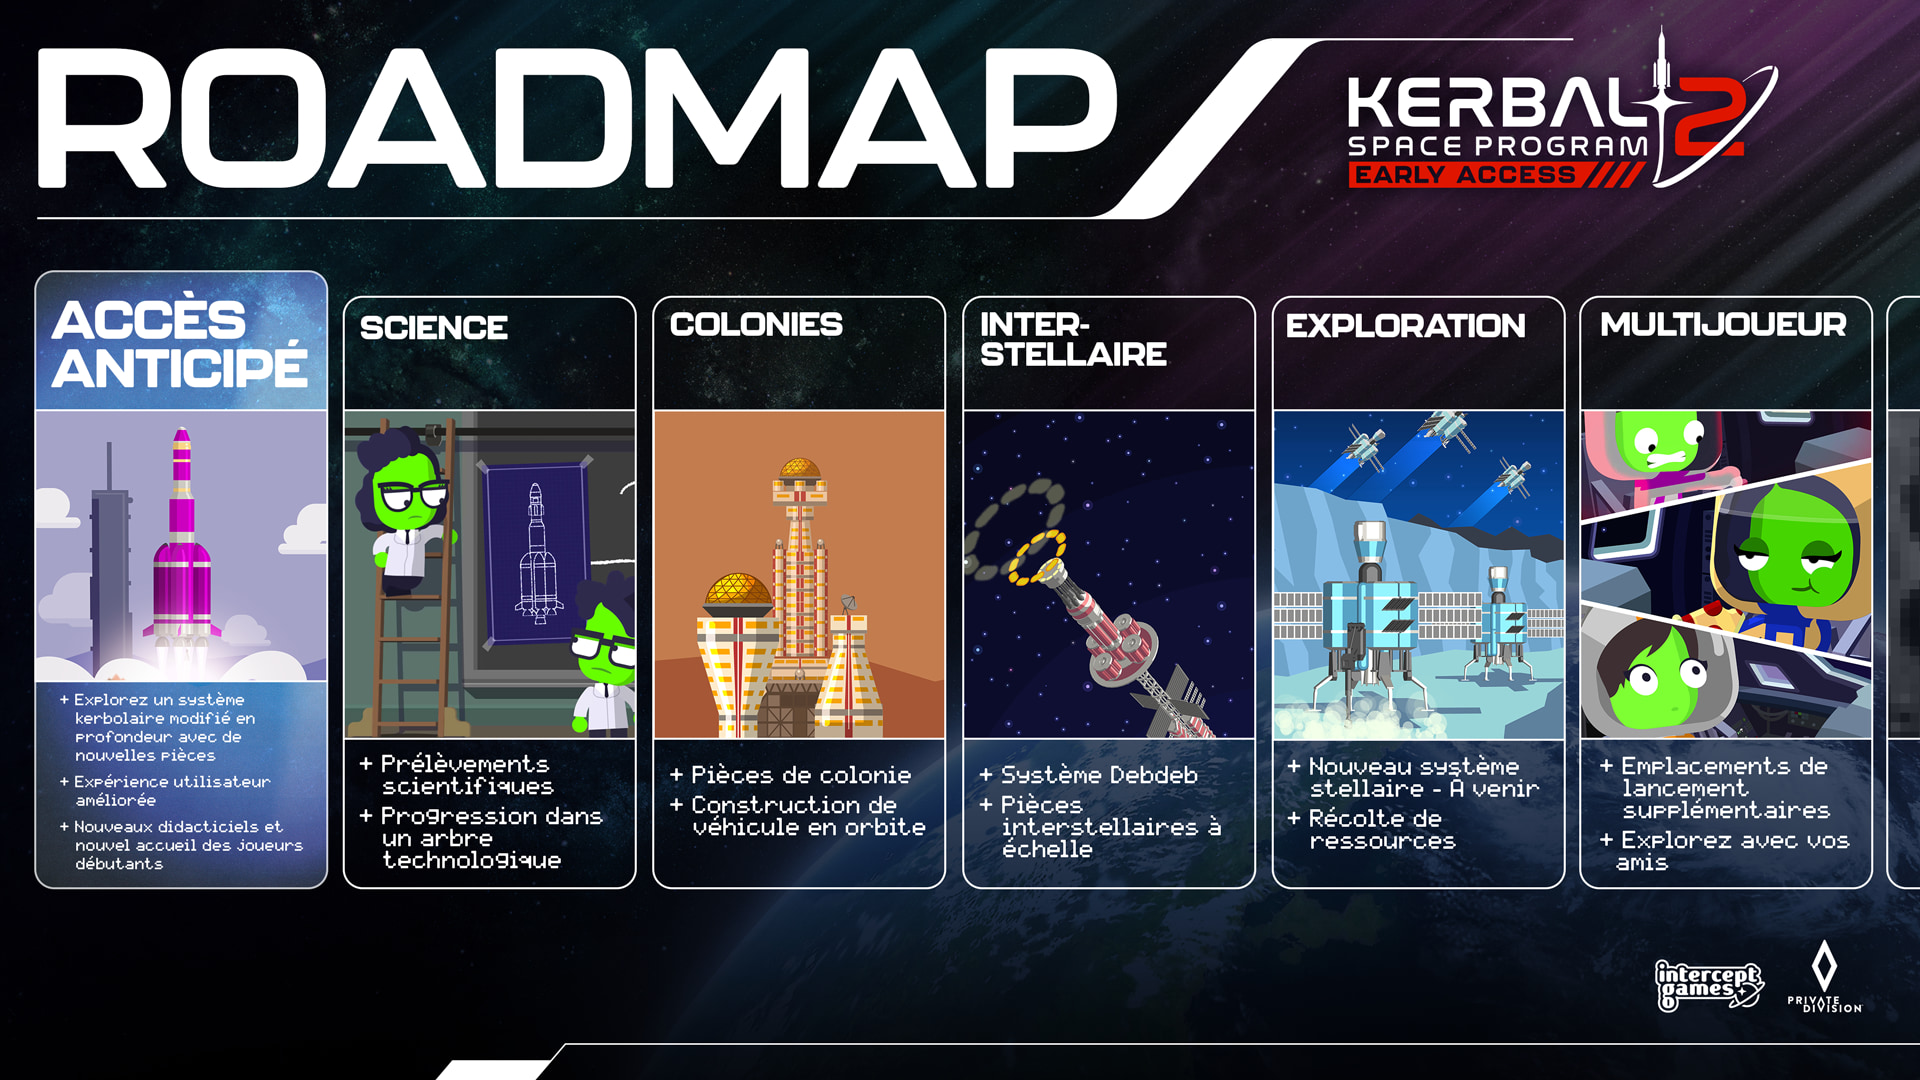 [Jeux] Kerbal Space Program 2 (24/02/2023) - Page 4 KSP2_Steam_About_ROADMAP_FR-2